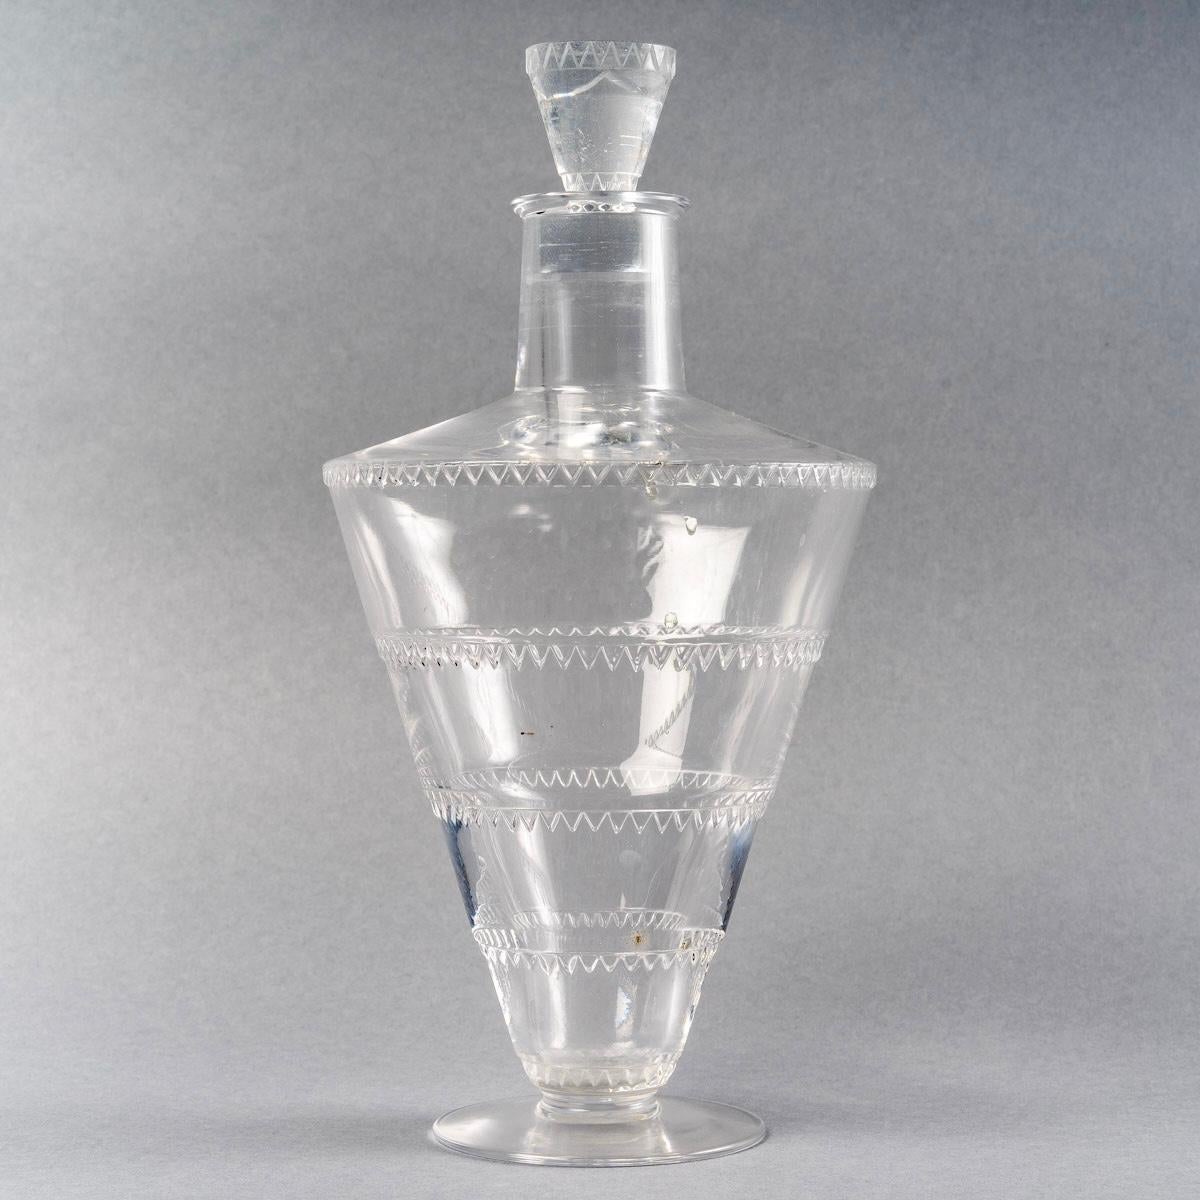 Art Glass 1932 René Lalique Set of Glasses Decanter Pitcher Vouvray Clear Glass 42 Pieces